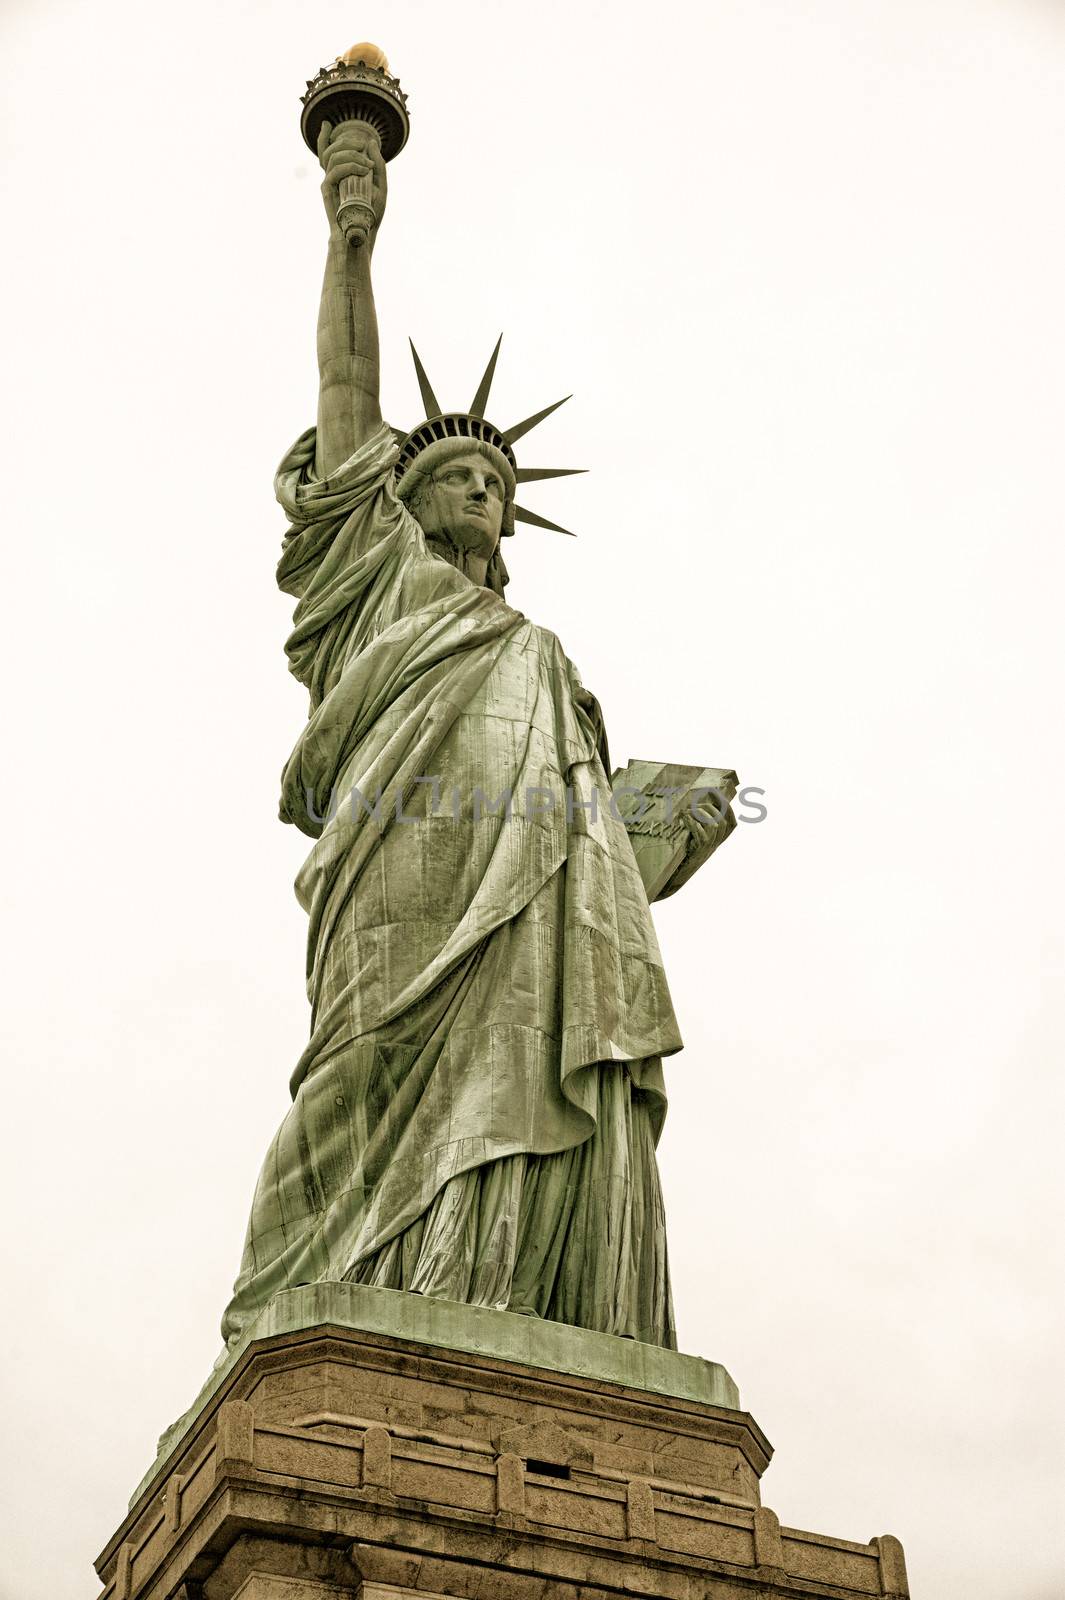 Statue Of Liberty by CelsoDiniz